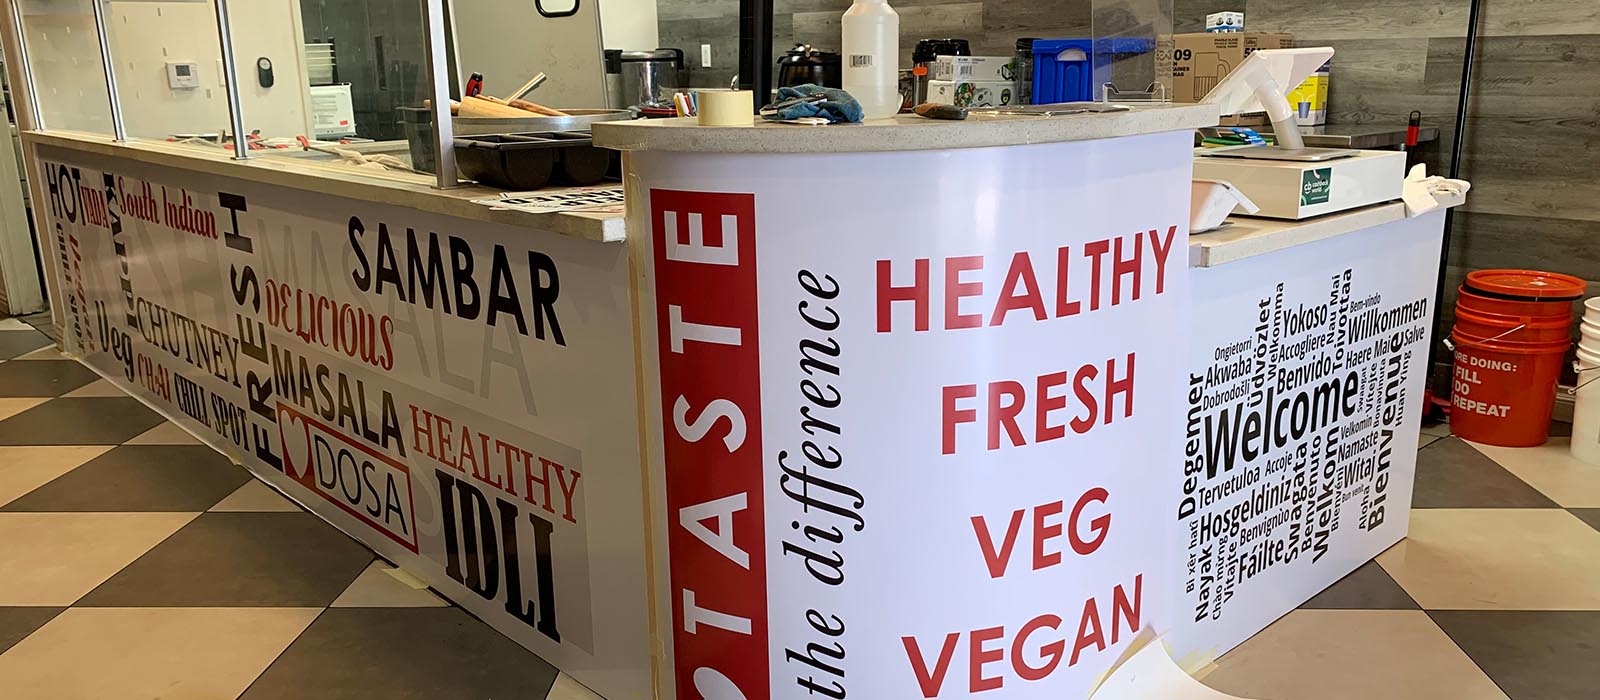 Crest Signs & Printing - Healthy Fresh Veg Vegan Work